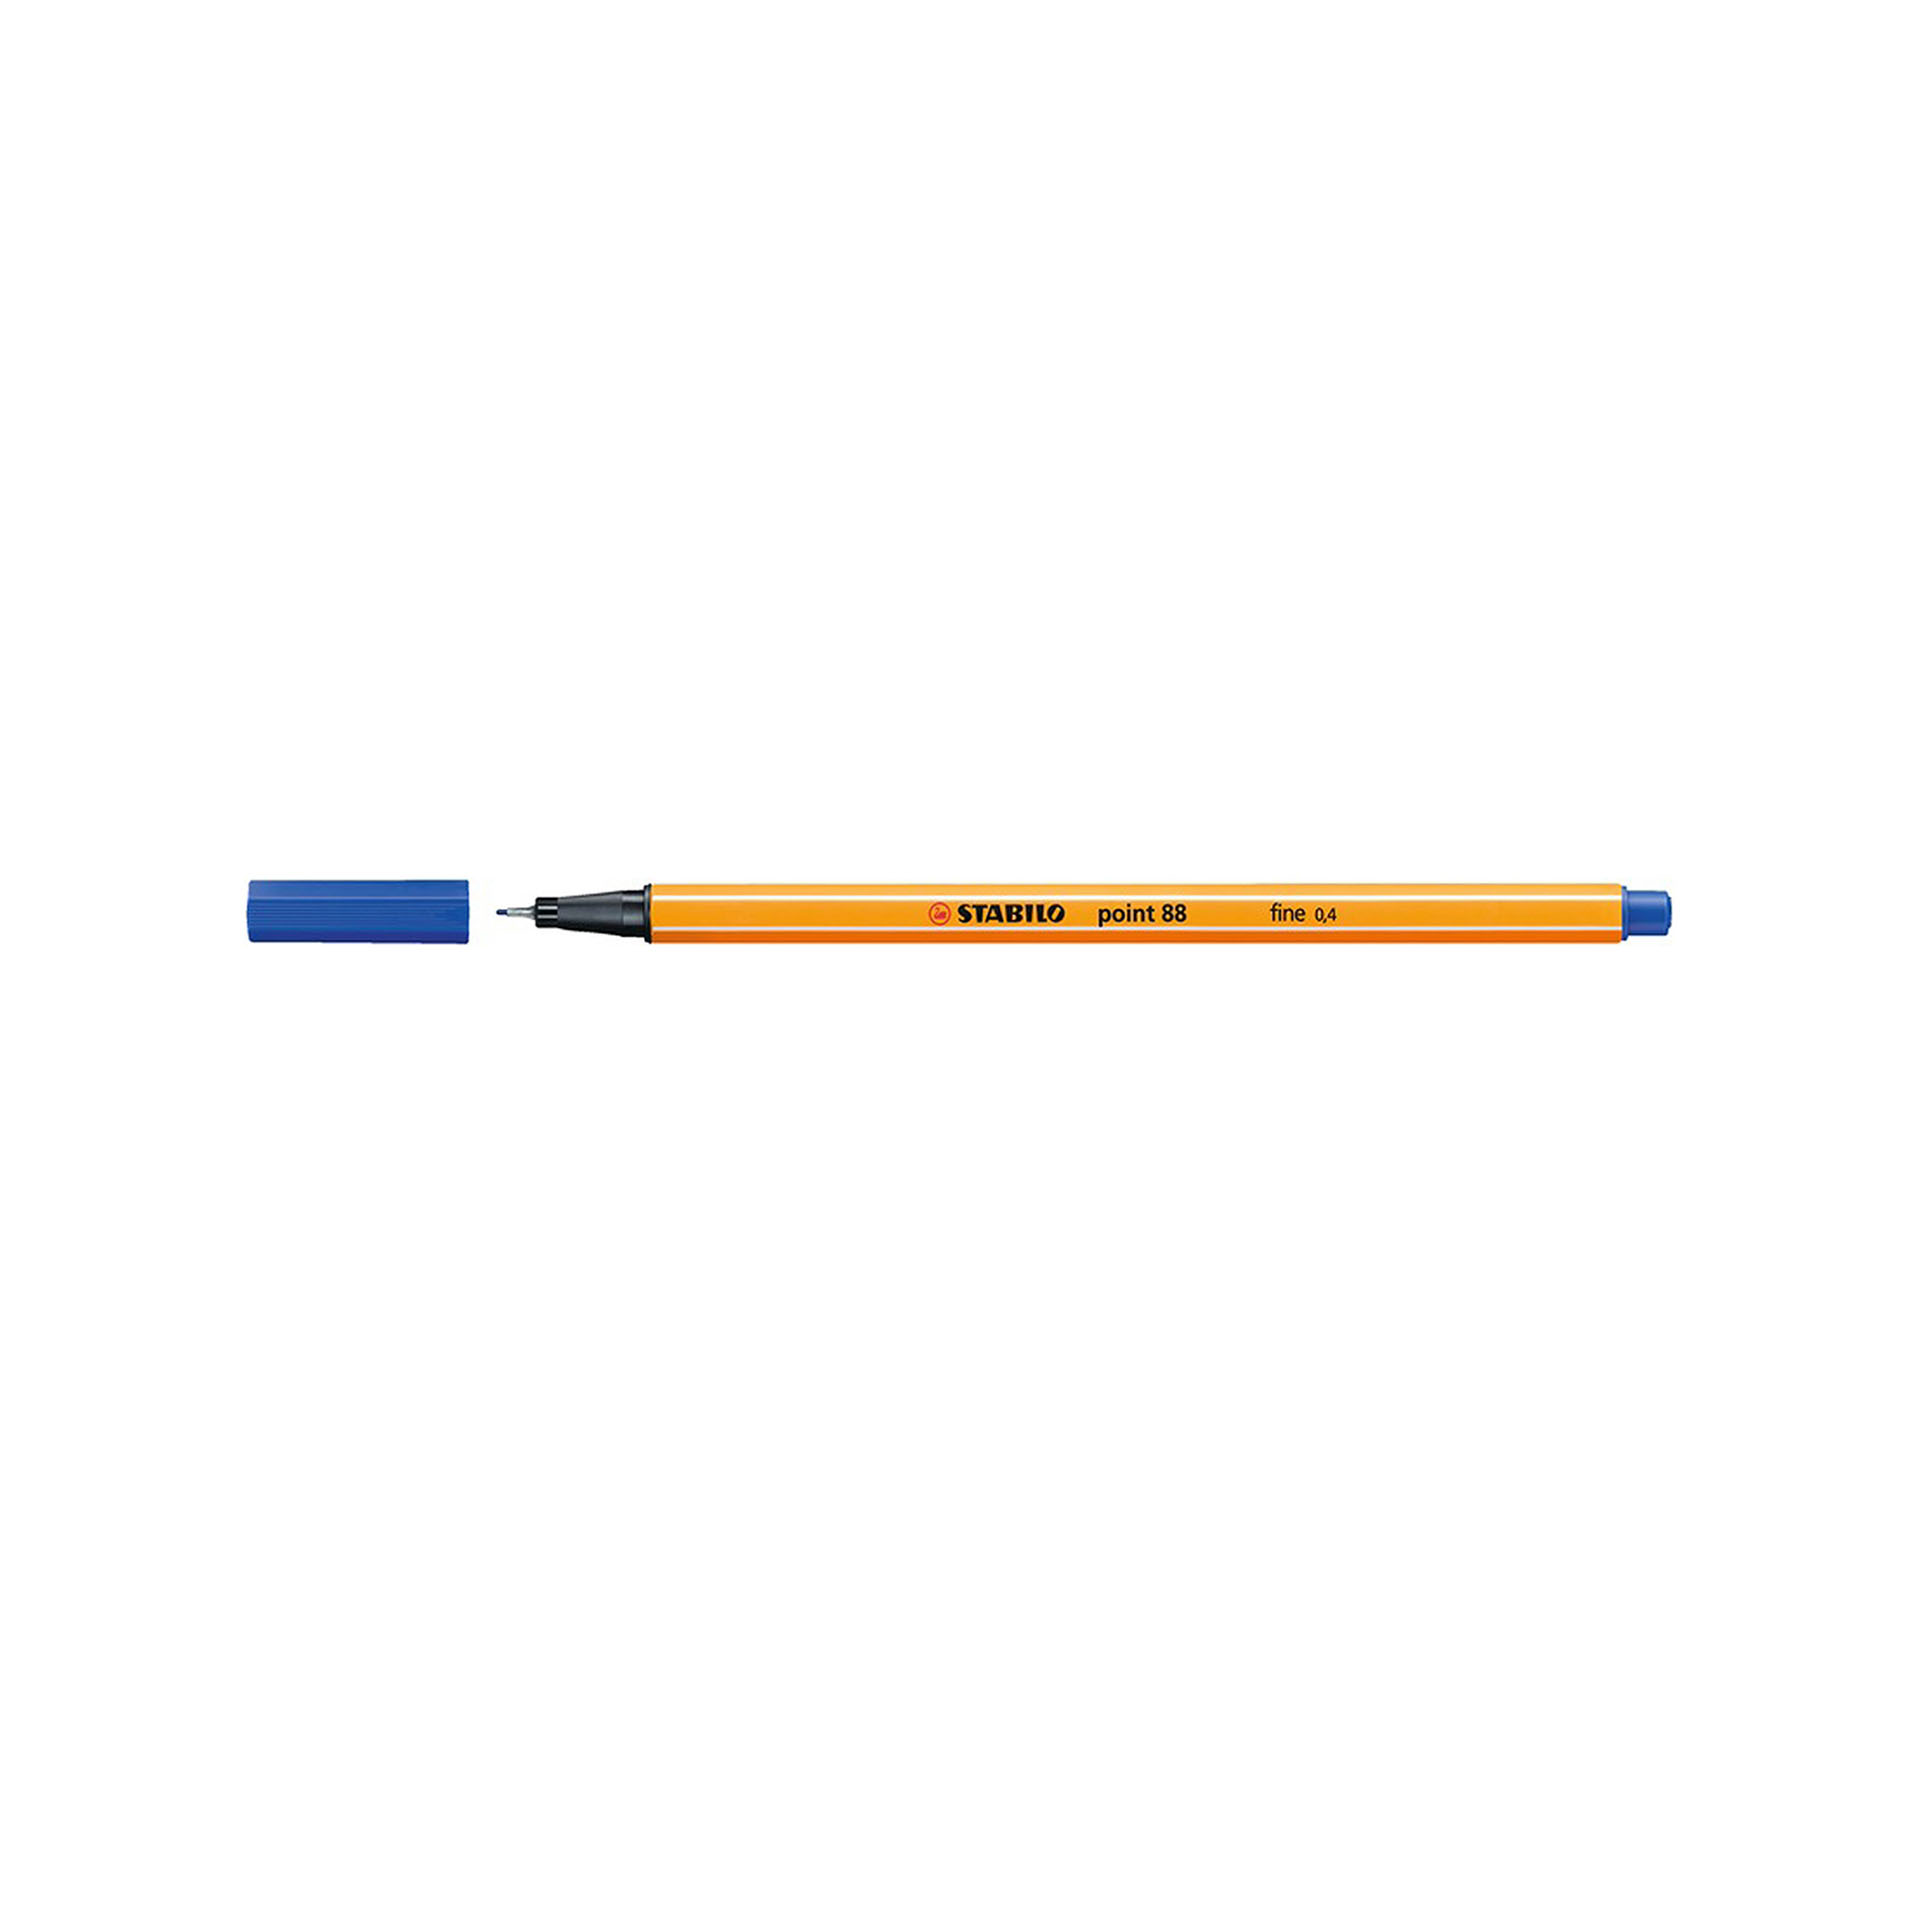 Fineliner - STABILO point 88 - Pack da 3 - Blu, , large